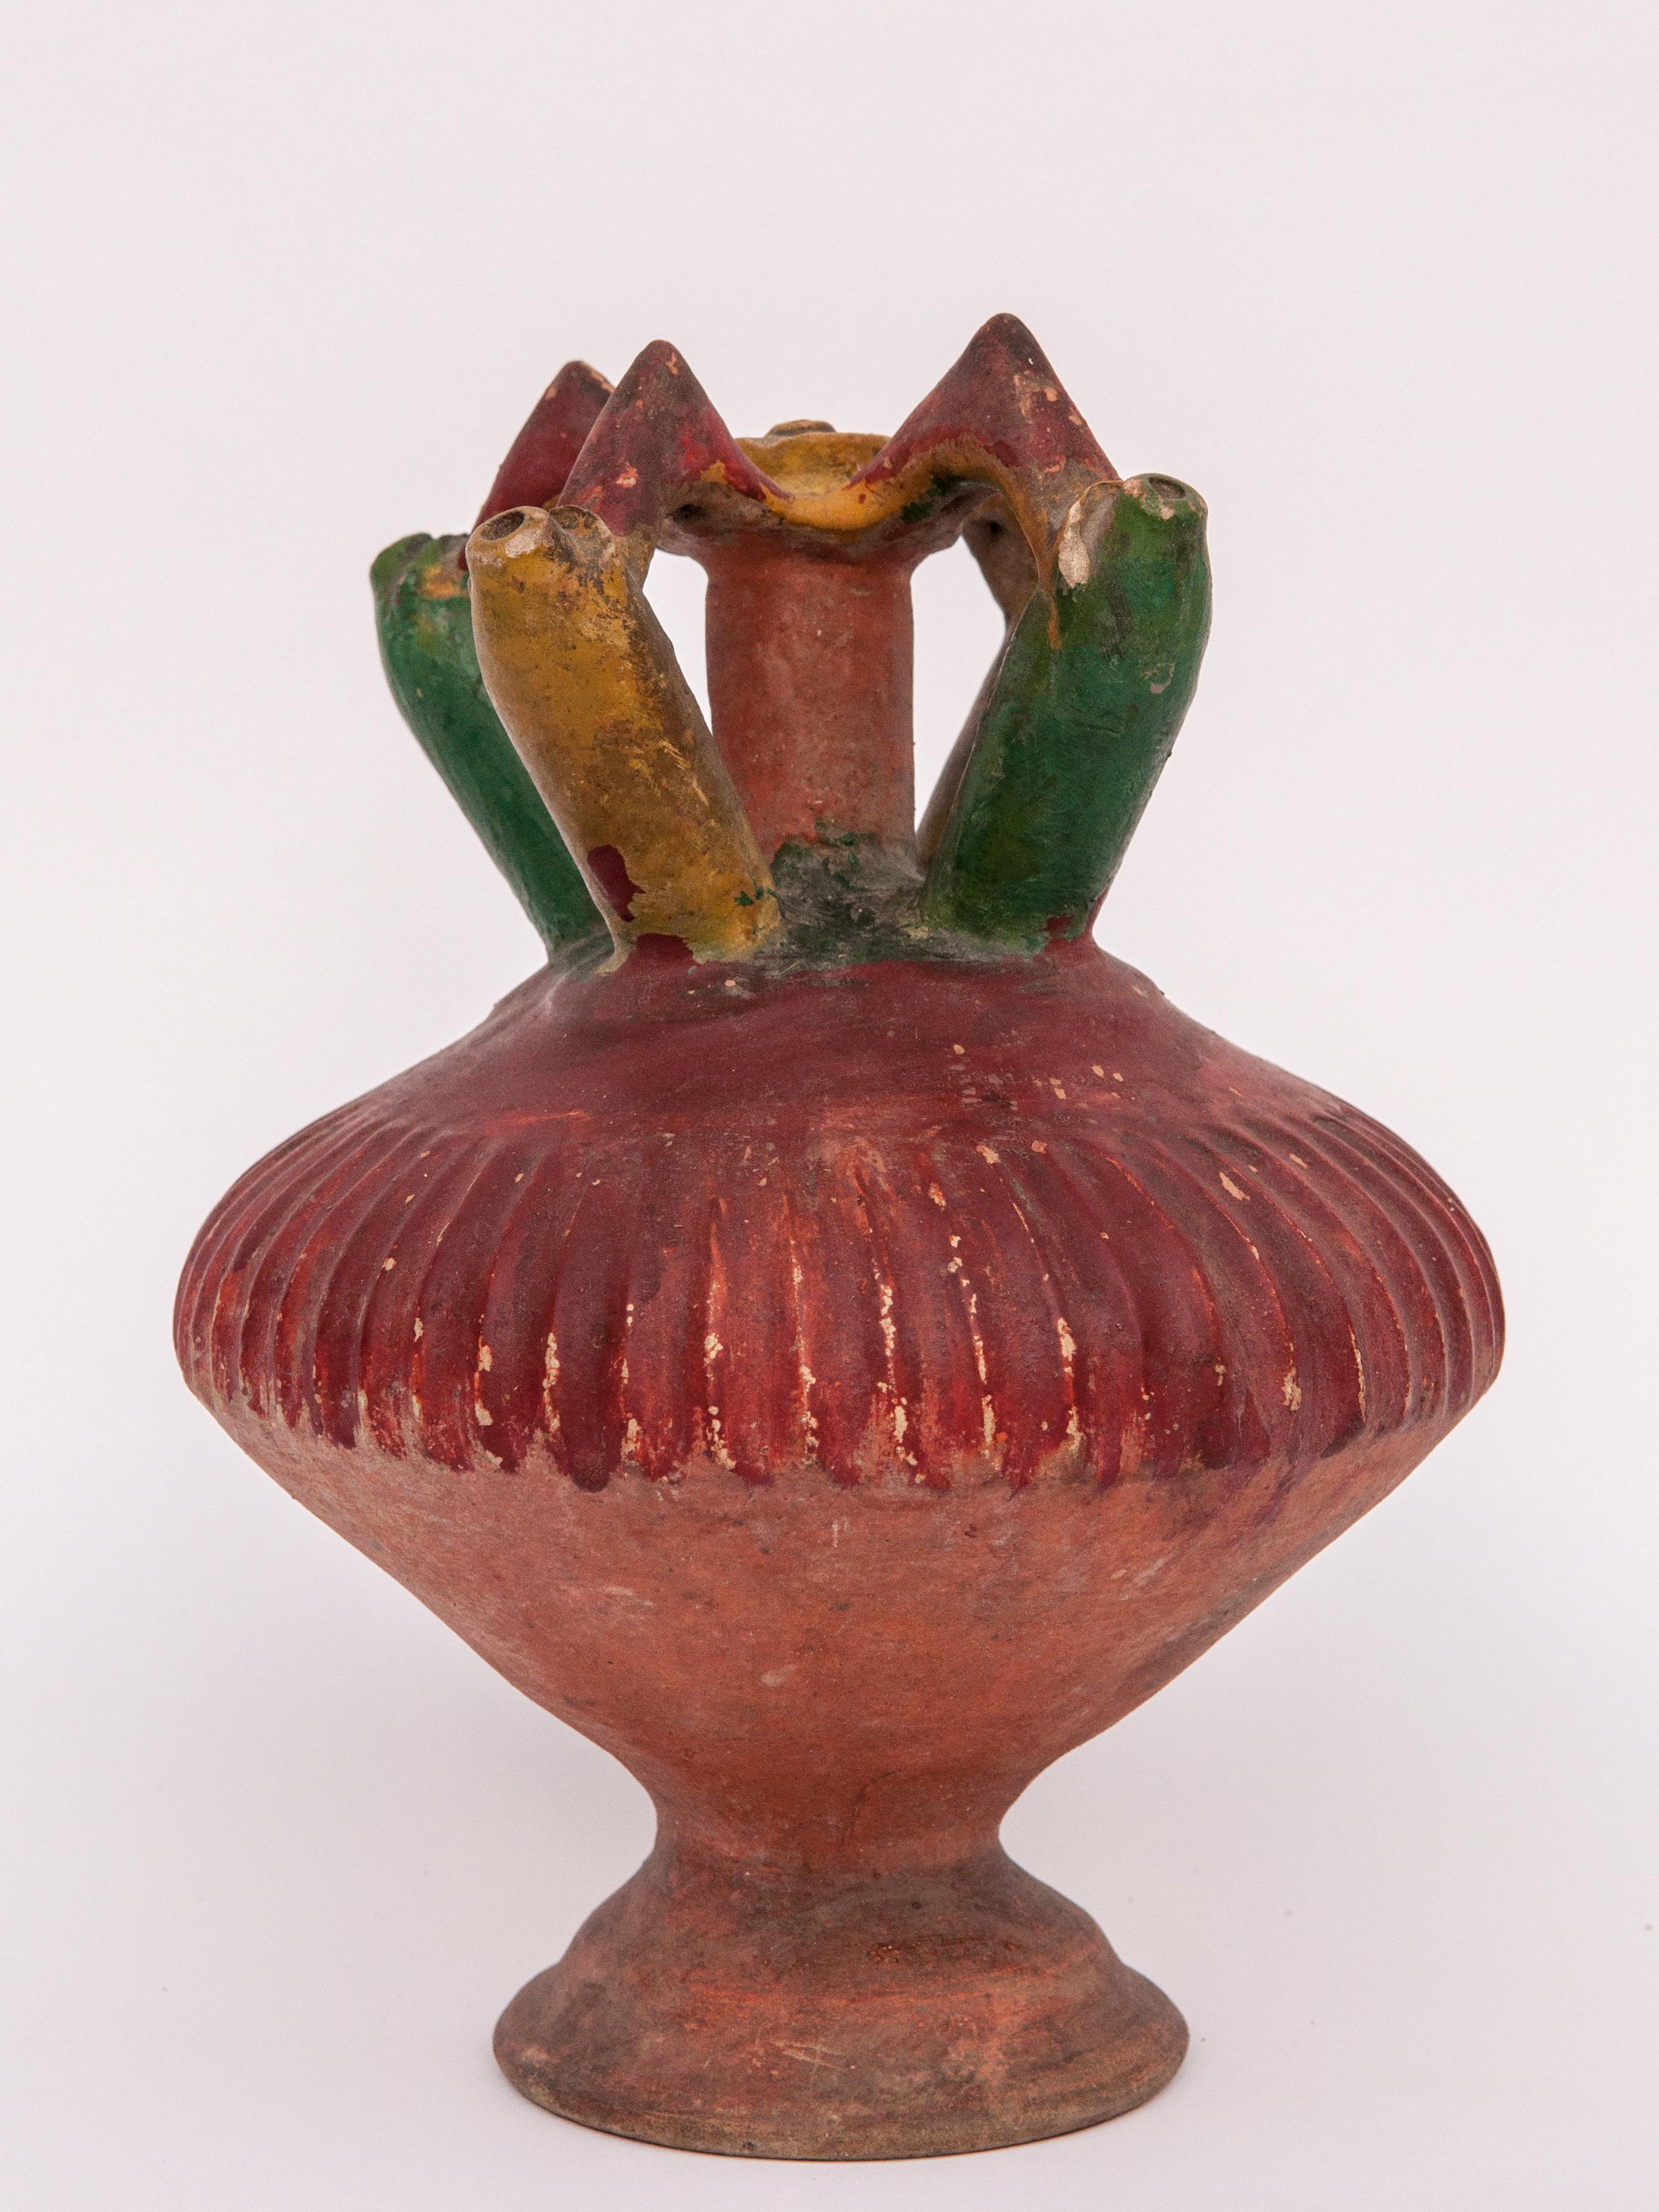 Indonesian Kendi Earthenware Ritual Vessel with Original Color, Sumatra. Early 20th Century